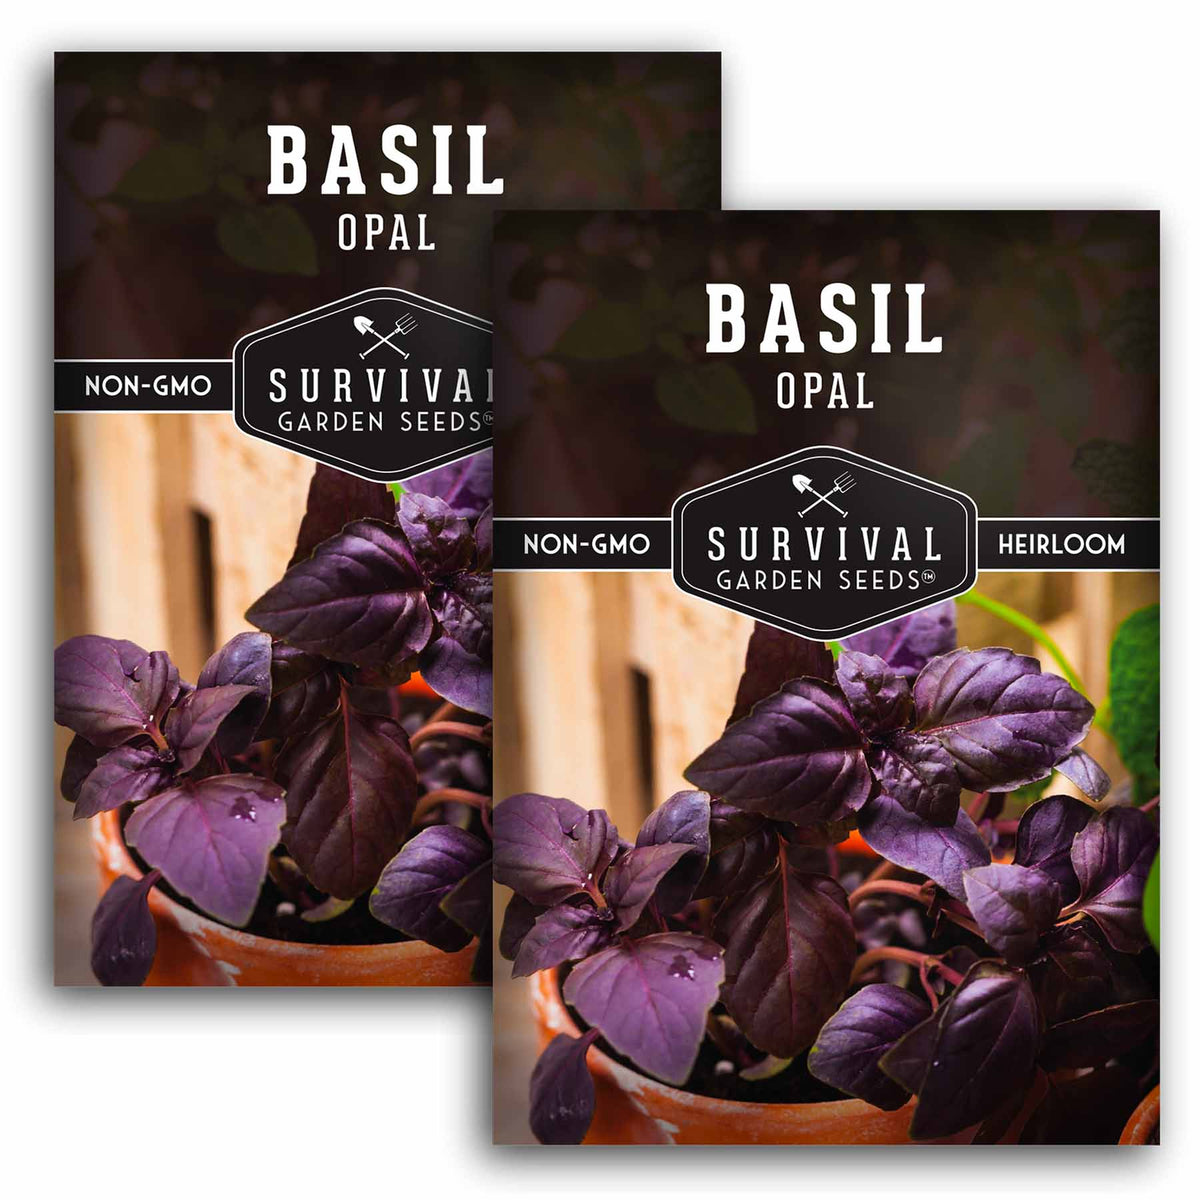 2 packs of opal basil seeds